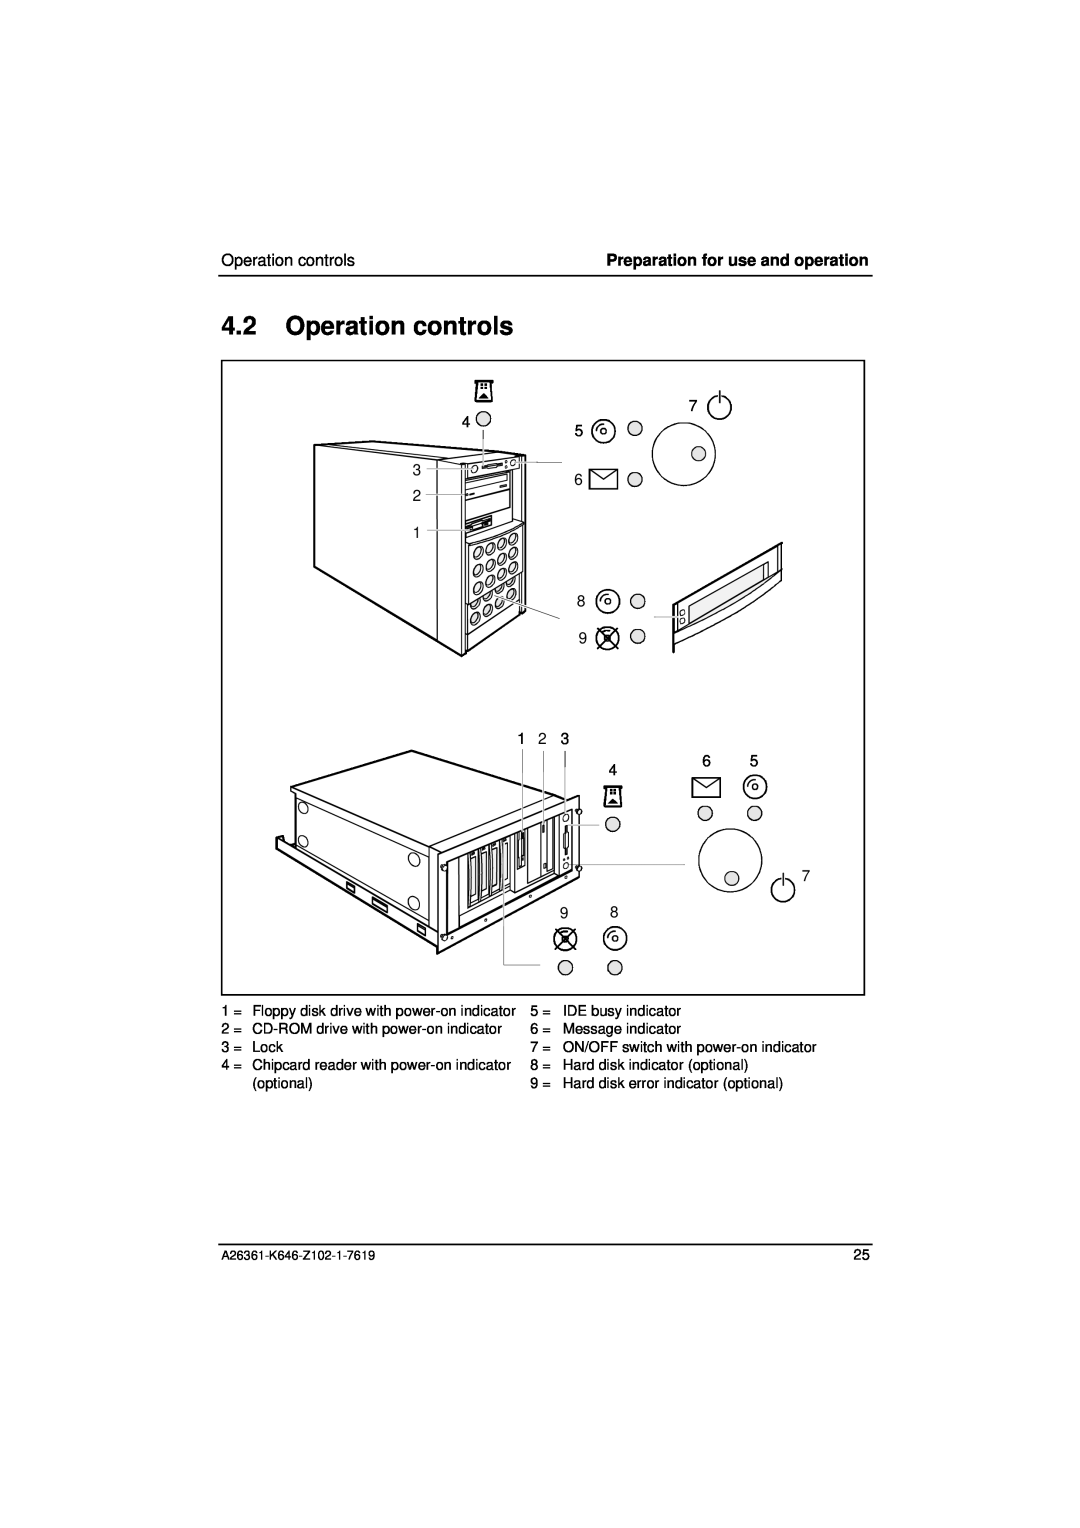 Fujitsu B120 manual Operation controls, Preparation for use and operation, A26361-K646-Z102-1-7619 